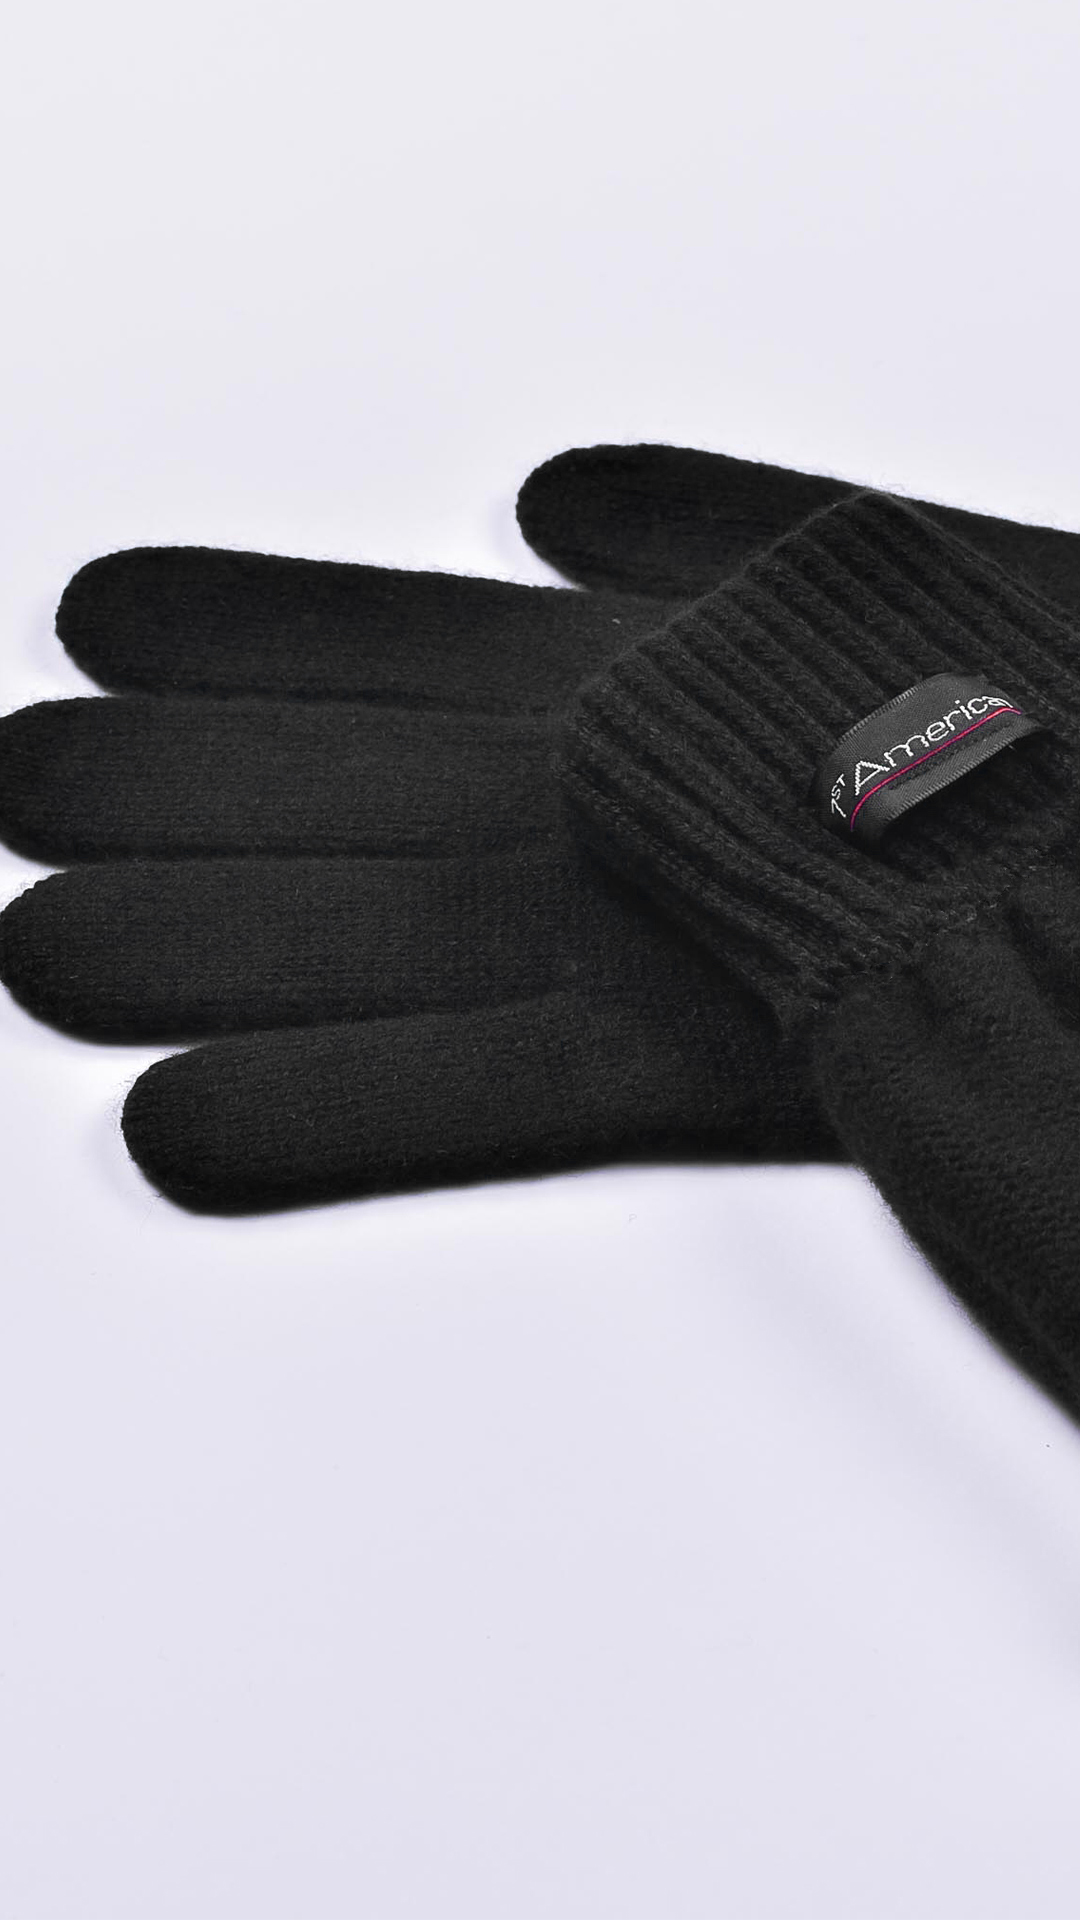 Glovesdario nero 3 1 1stAmerican guanti in lana e cashmere da uomo Made in Italy - caldi guanti invernali